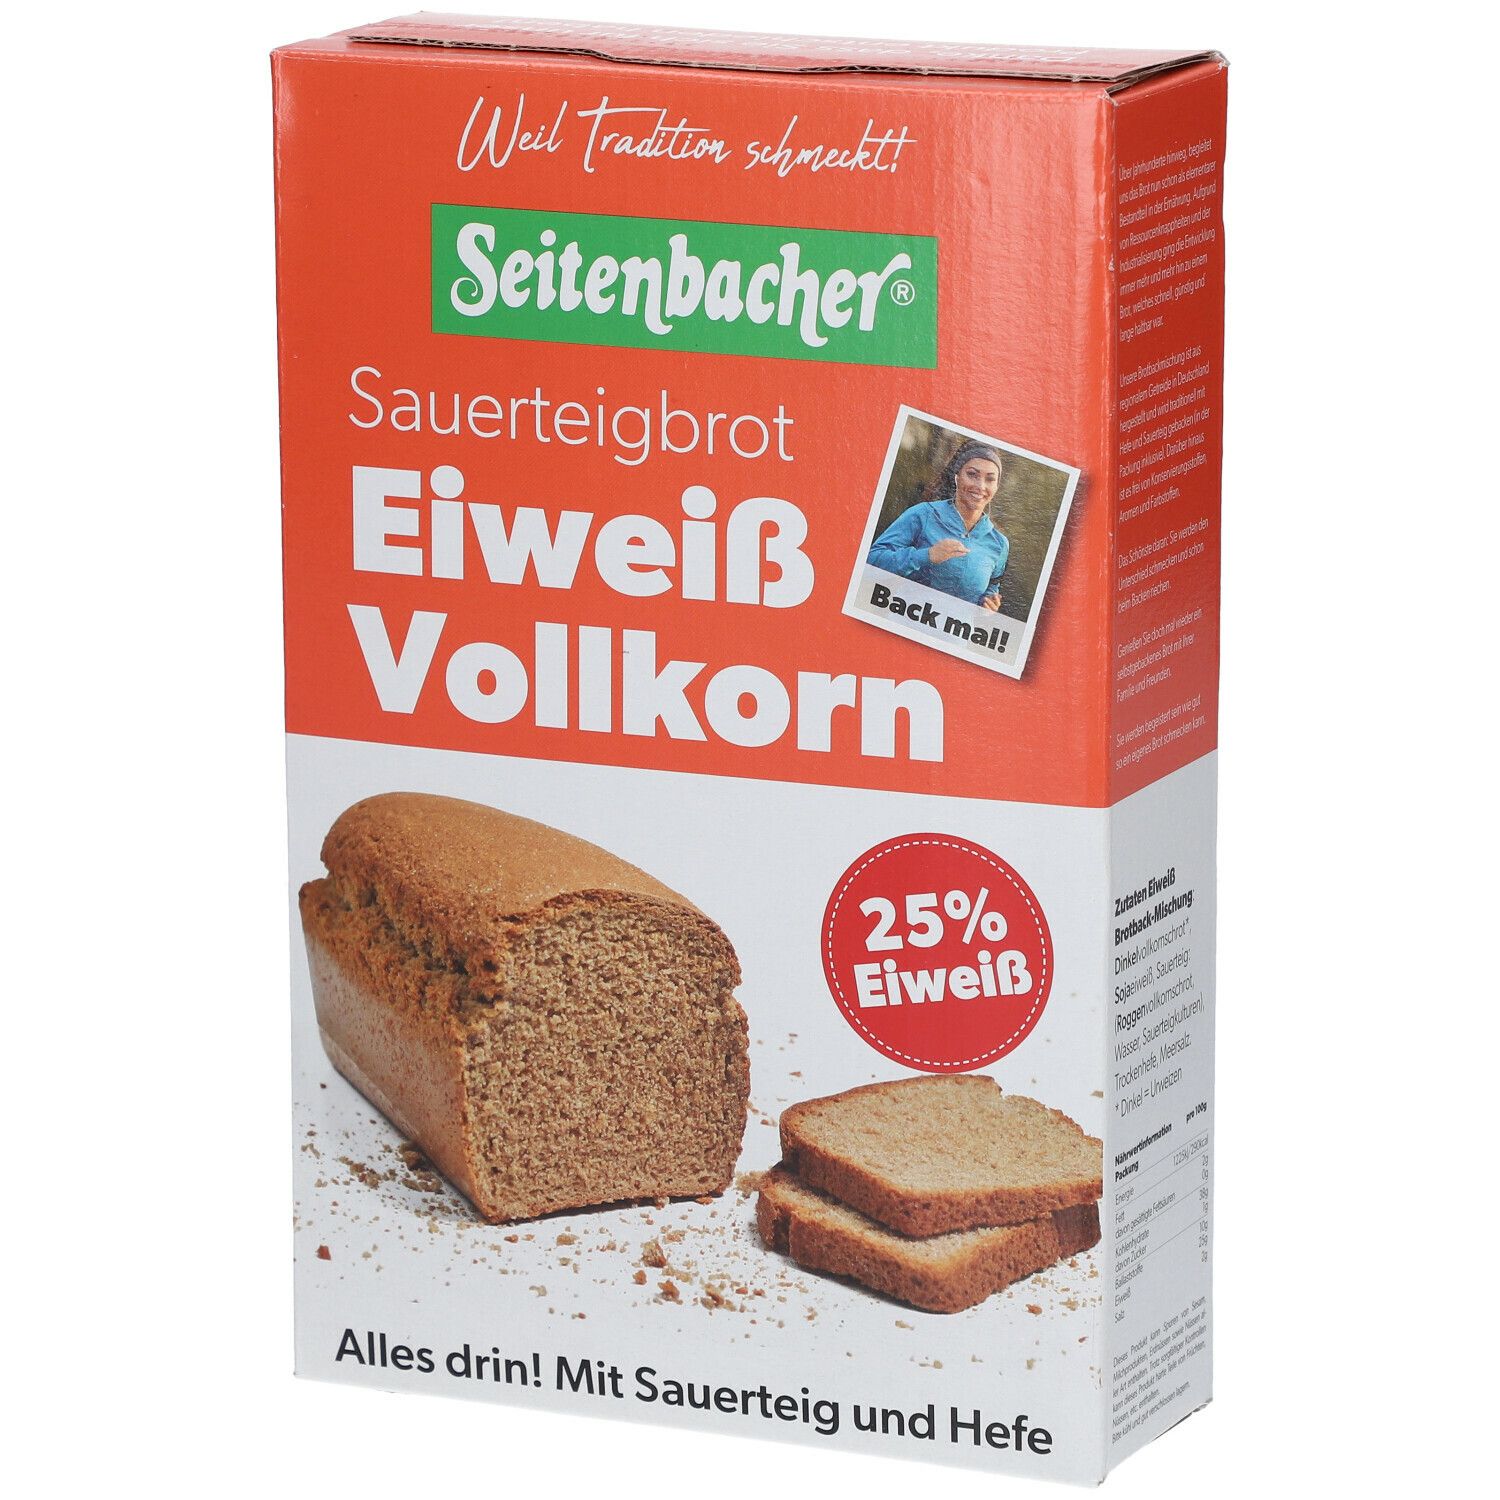 Seitenbacher® Sauerteigbrot Eiweiß Vollkorn